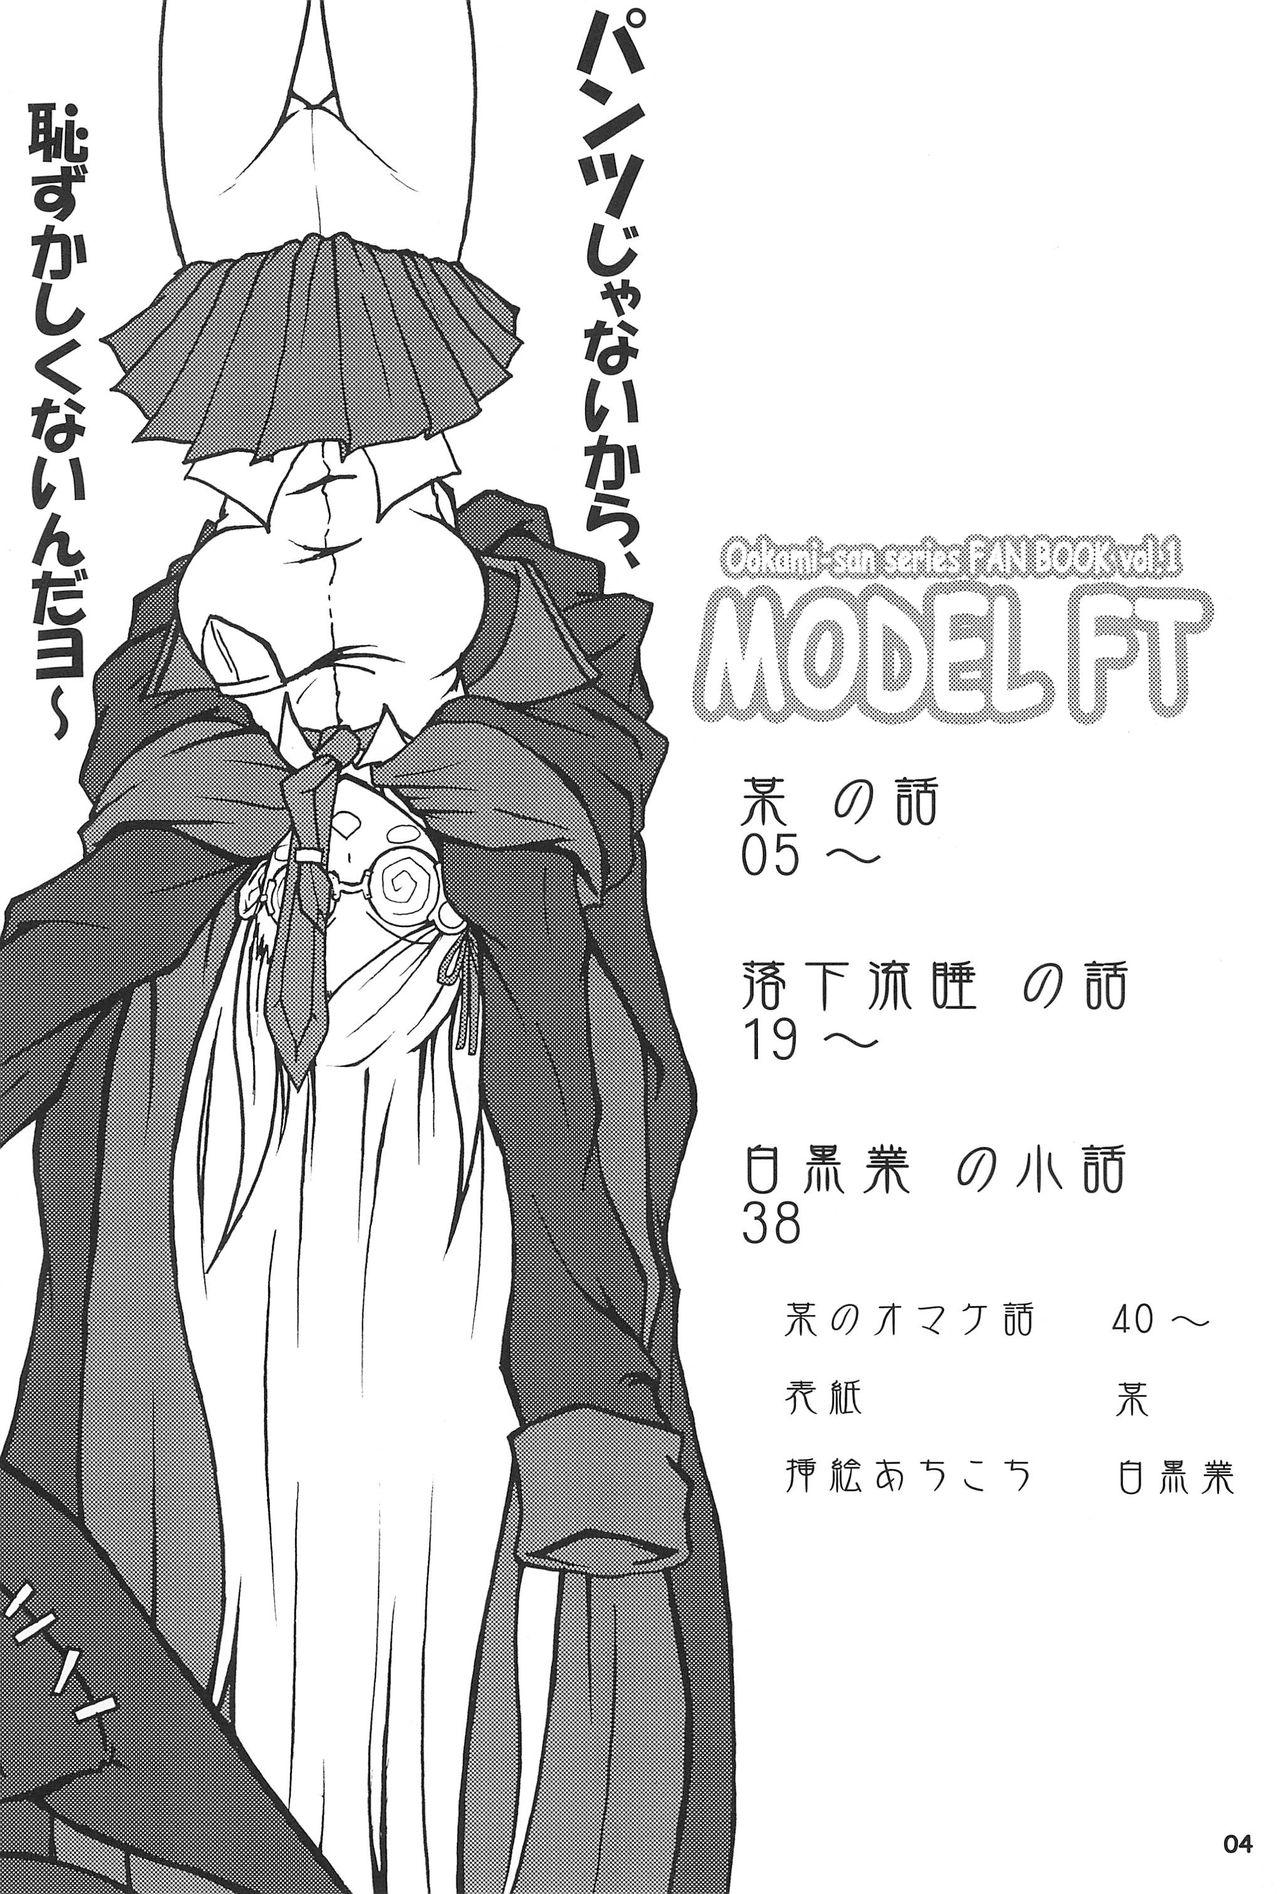 Gemendo MODEL FT - Ookami-san to shichinin no nakama-tachi Chat - Page 4